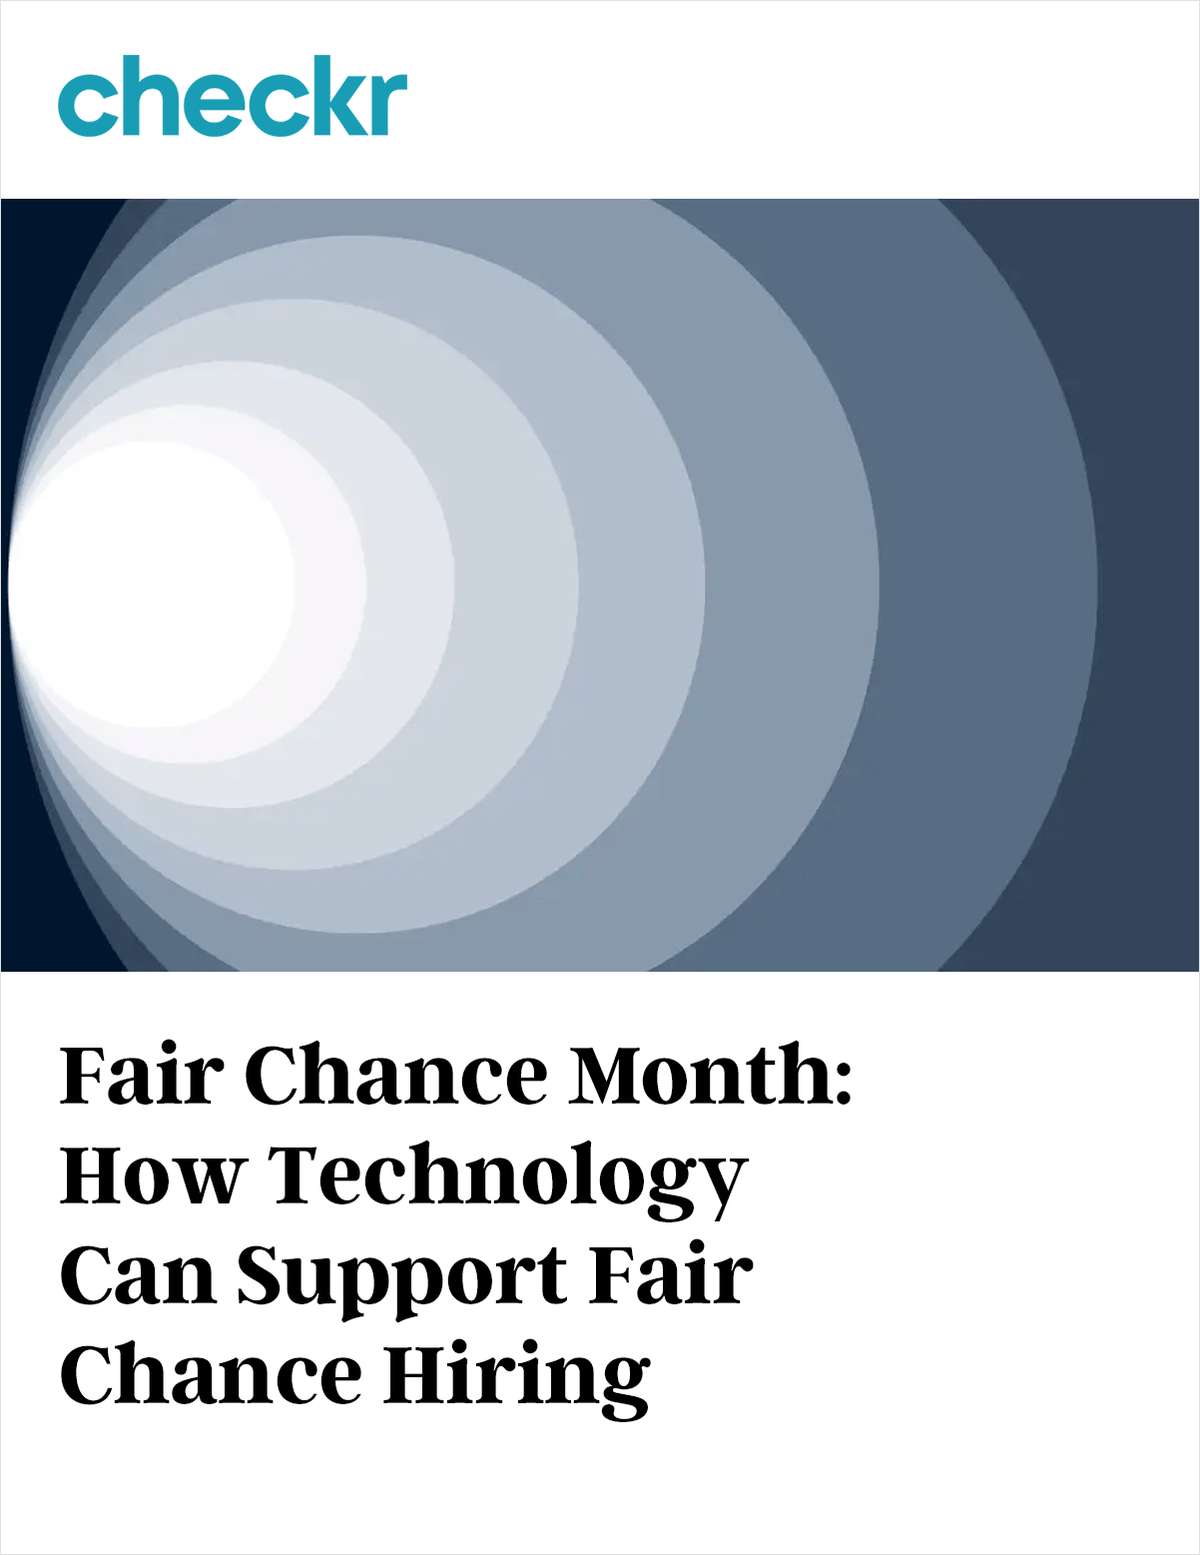 How Technology Can Support Fair Chance Hiring